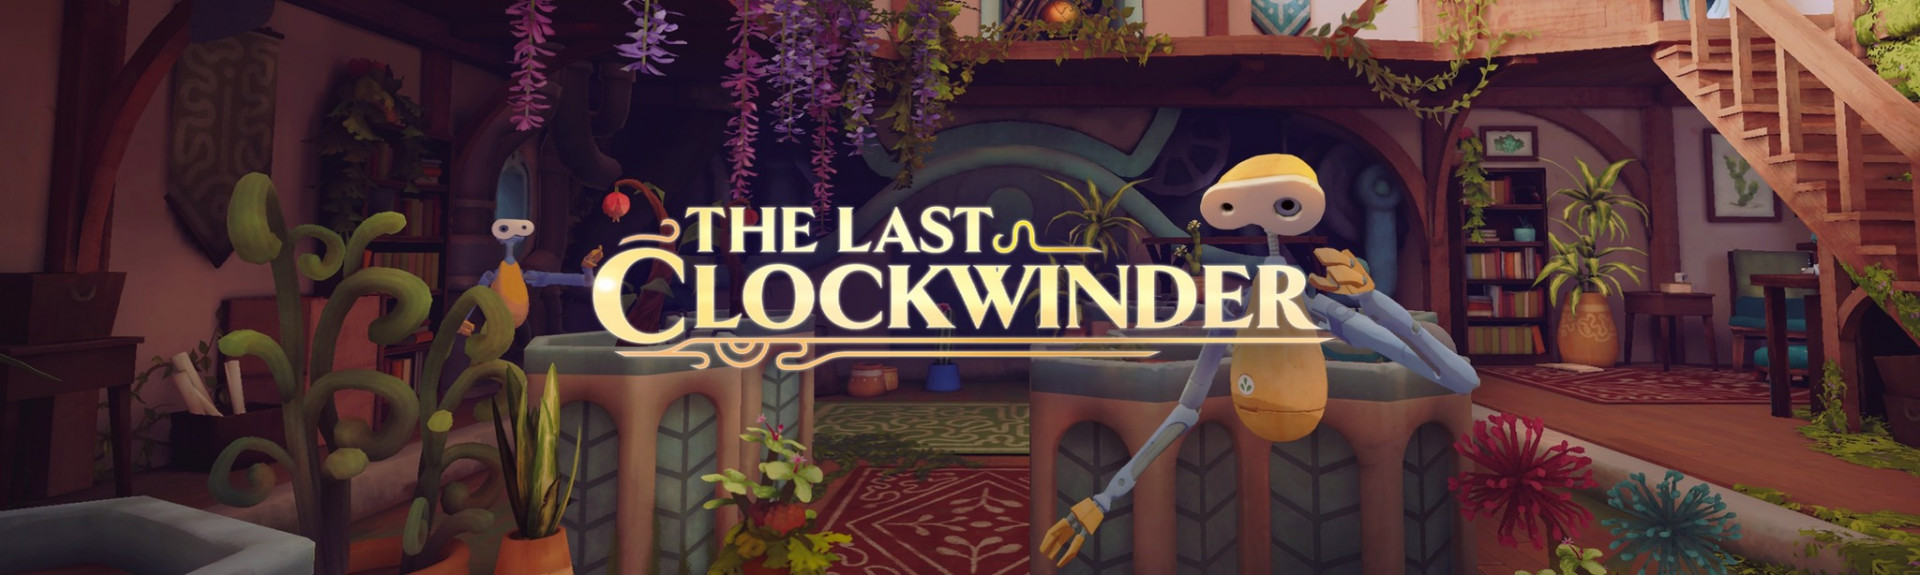 The Last Clockwinder: ANÁLISIS